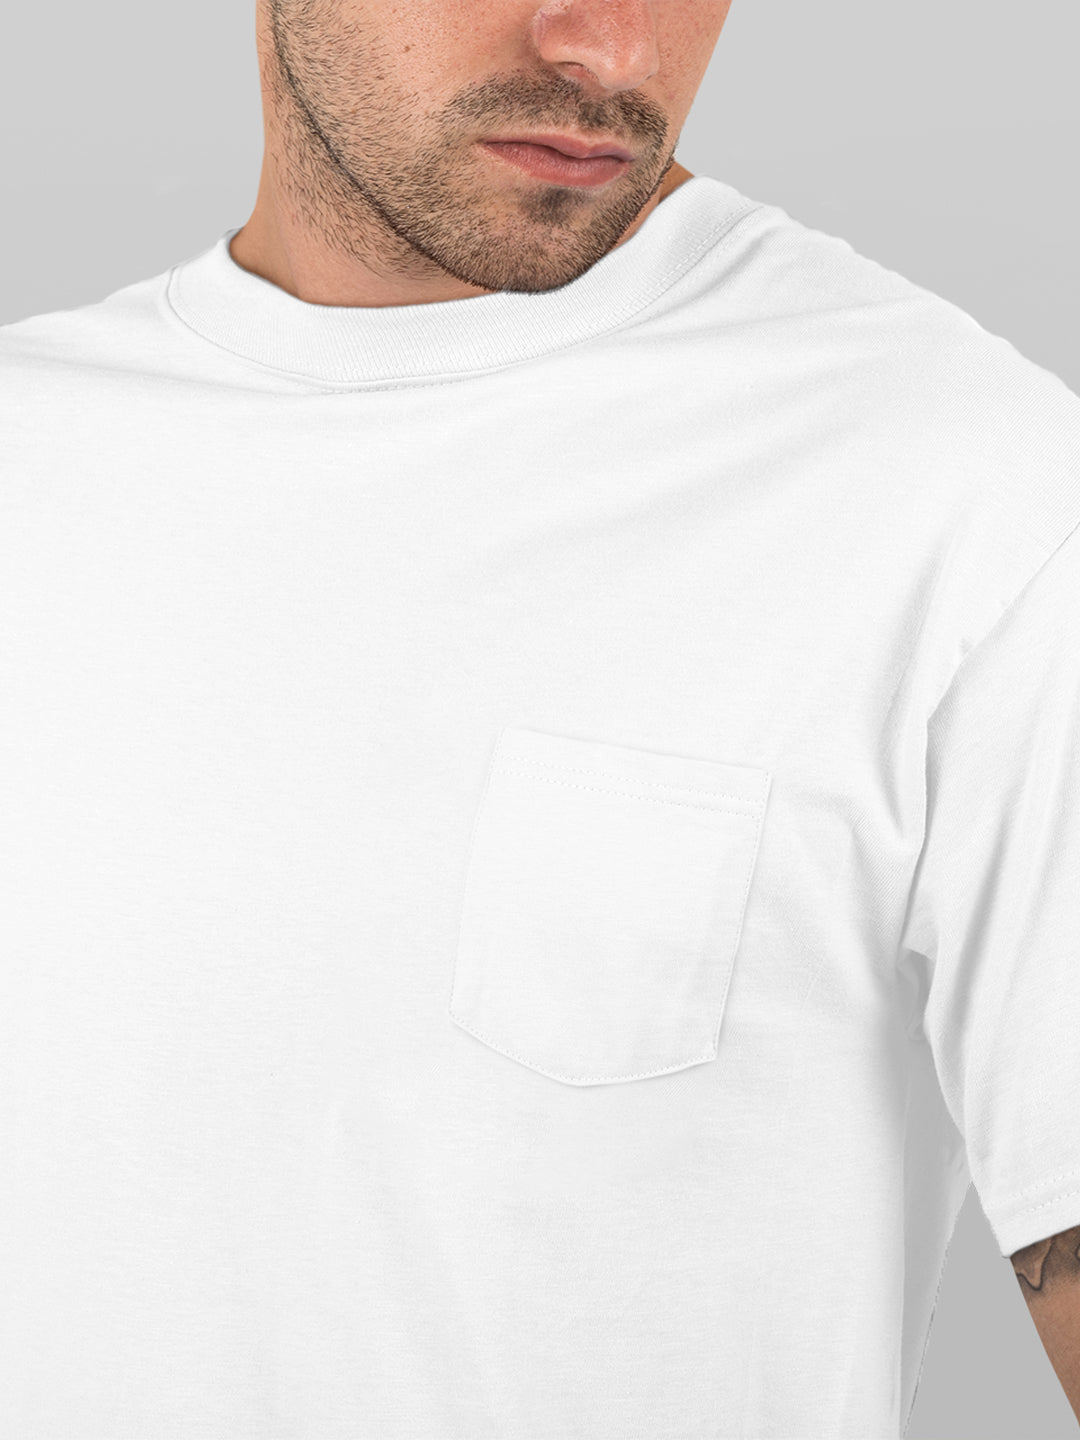 Baliza Men's 100% Cotton Round Neck T-shirt- Gray